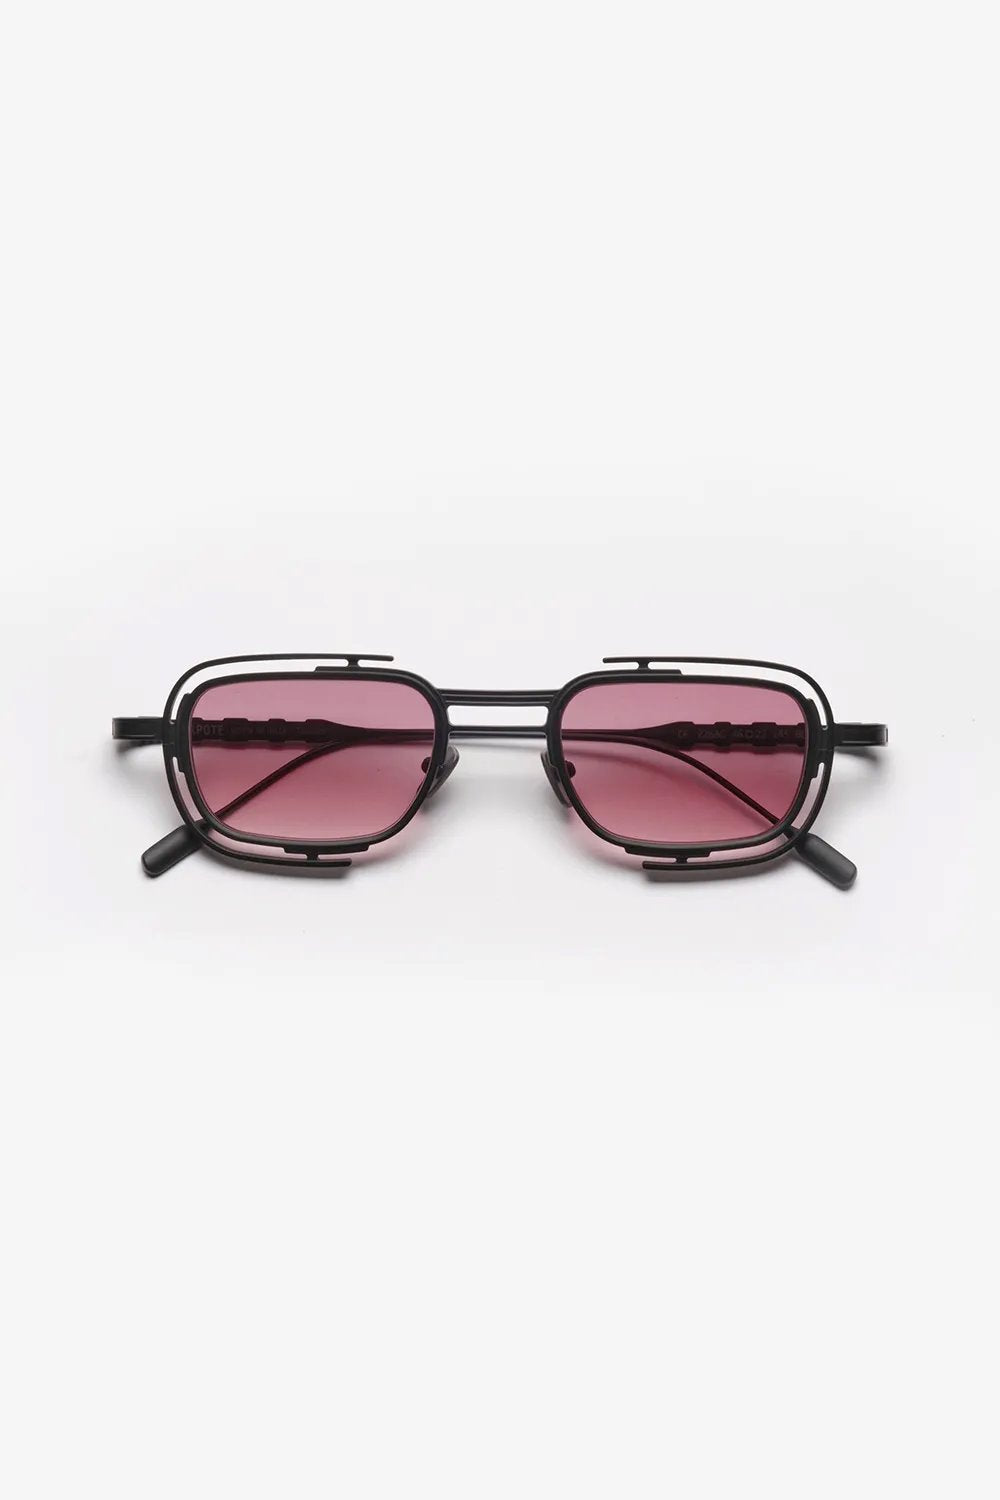 Capote - 226AC Sunglasses Capote Pink ONES 